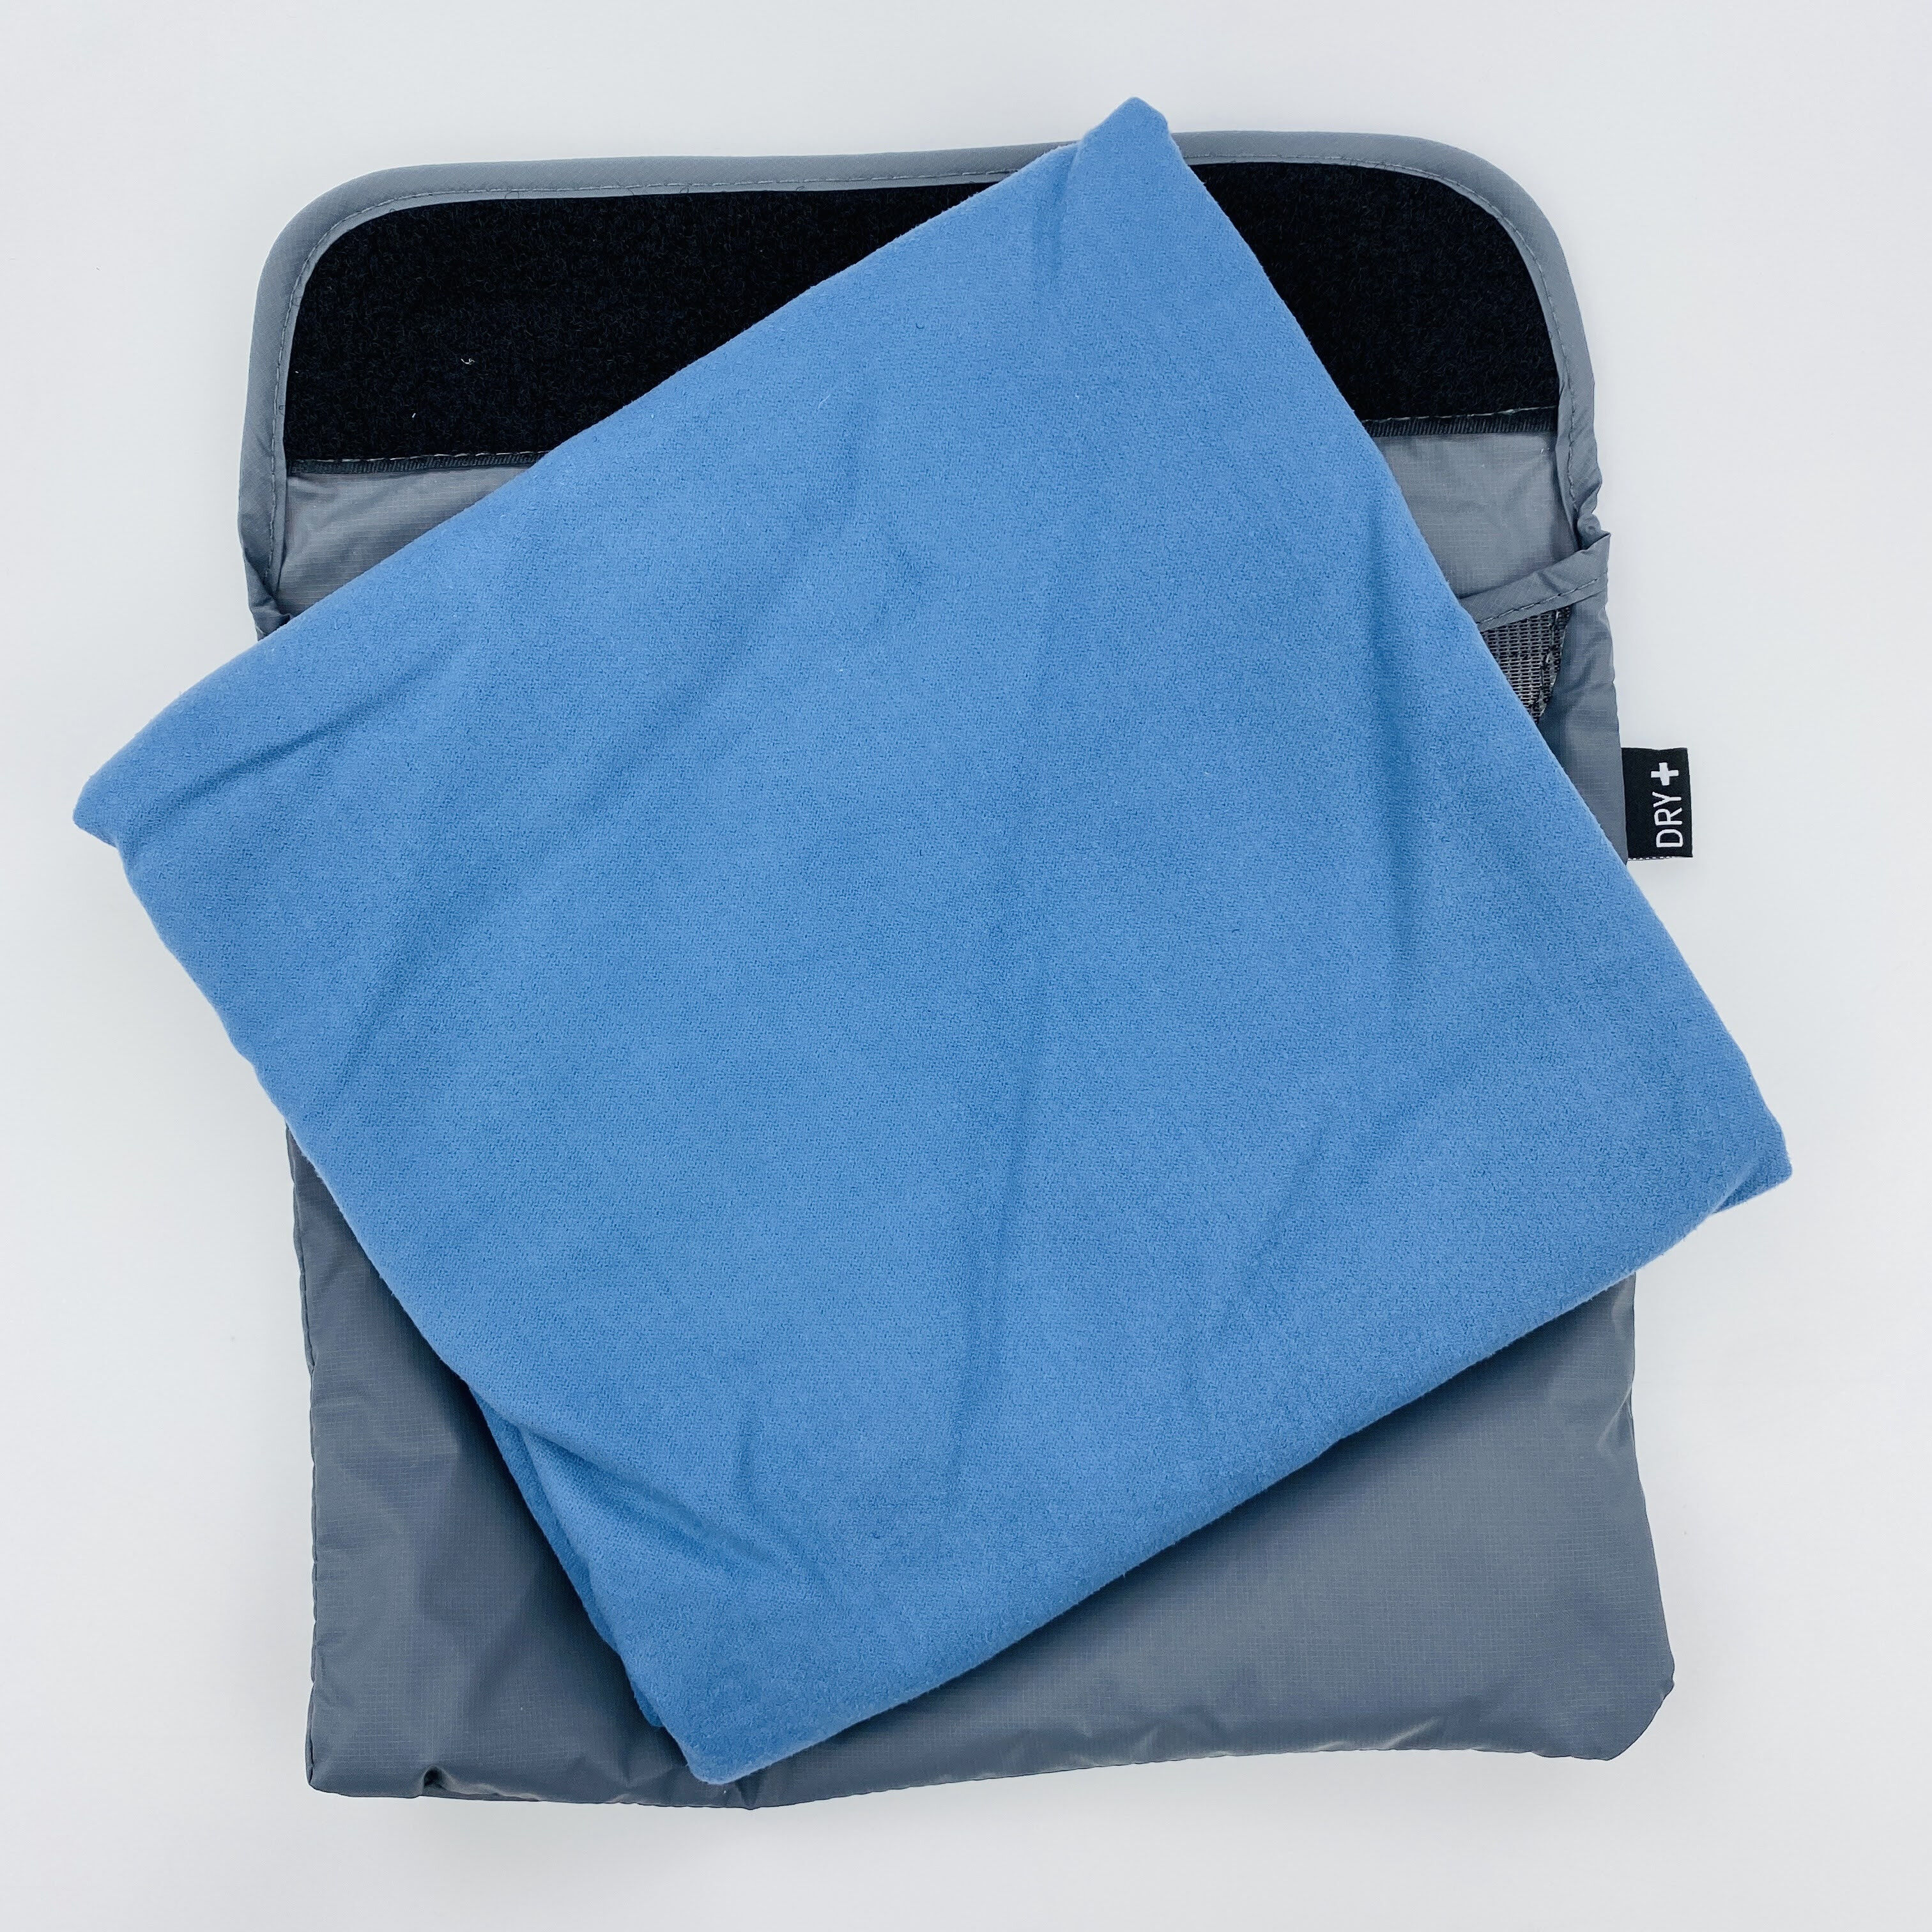 Sea To Summit Serviette DryBag - Second hand Travel towel - Blue - XL - 75 x 150 cm | Hardloop